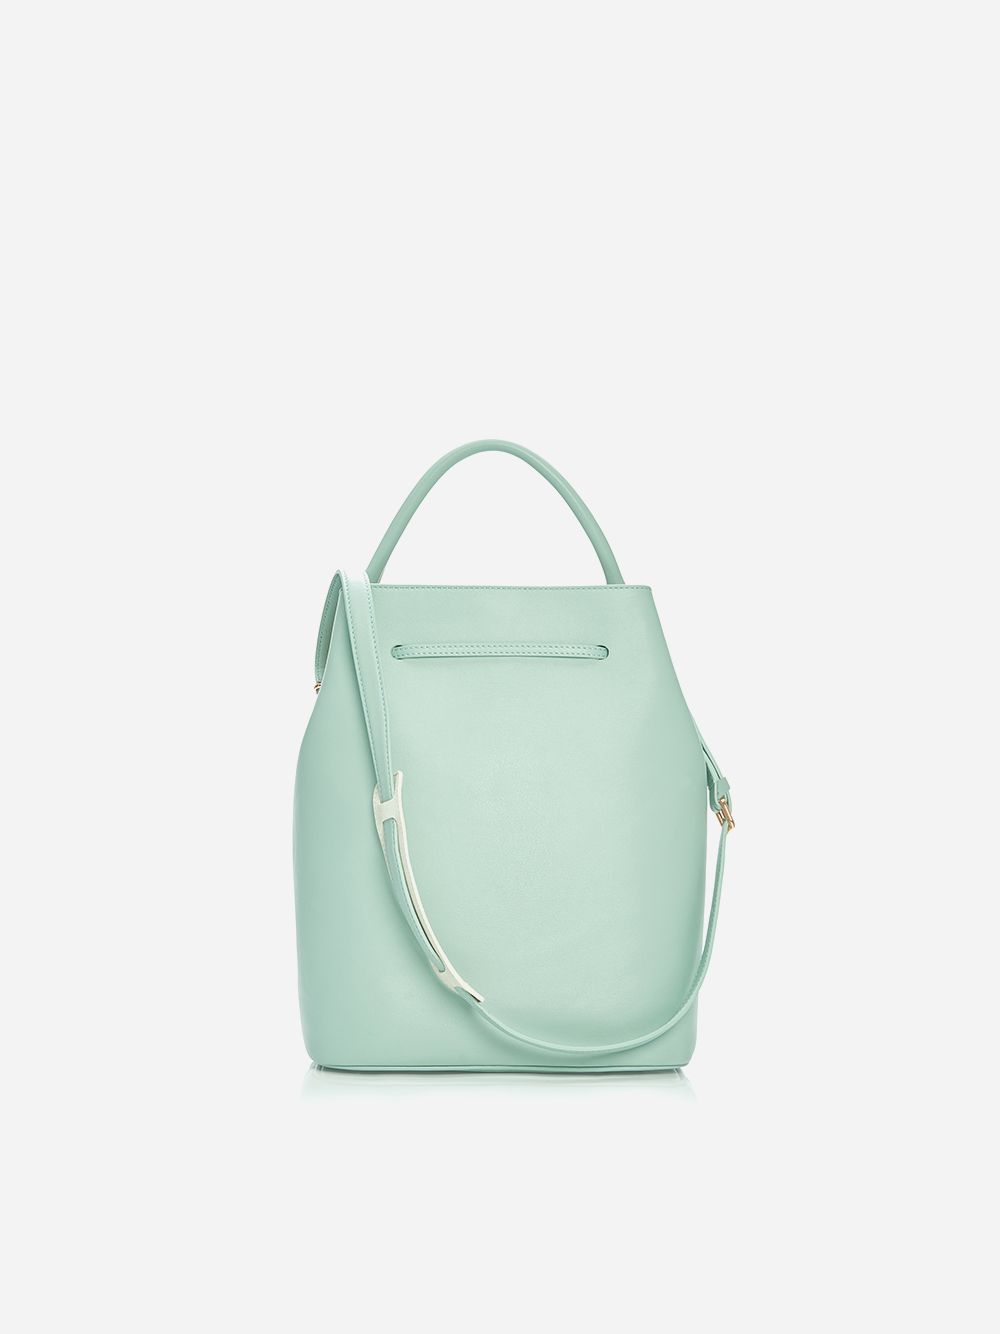 Mint Green Bag | Any Di